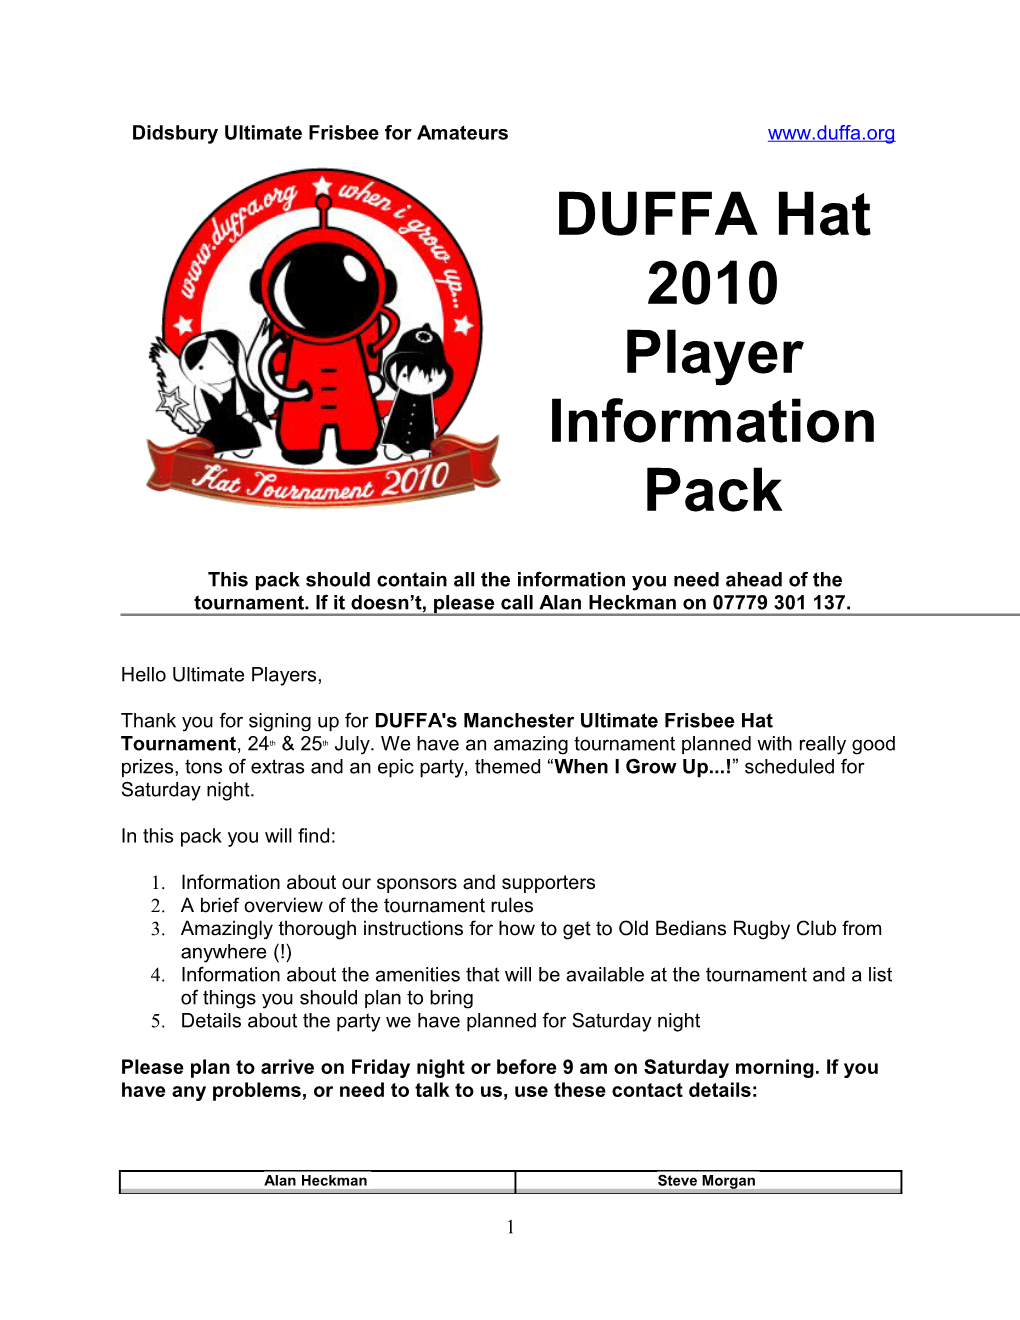 DUFFA Hat 2010 Players Pack